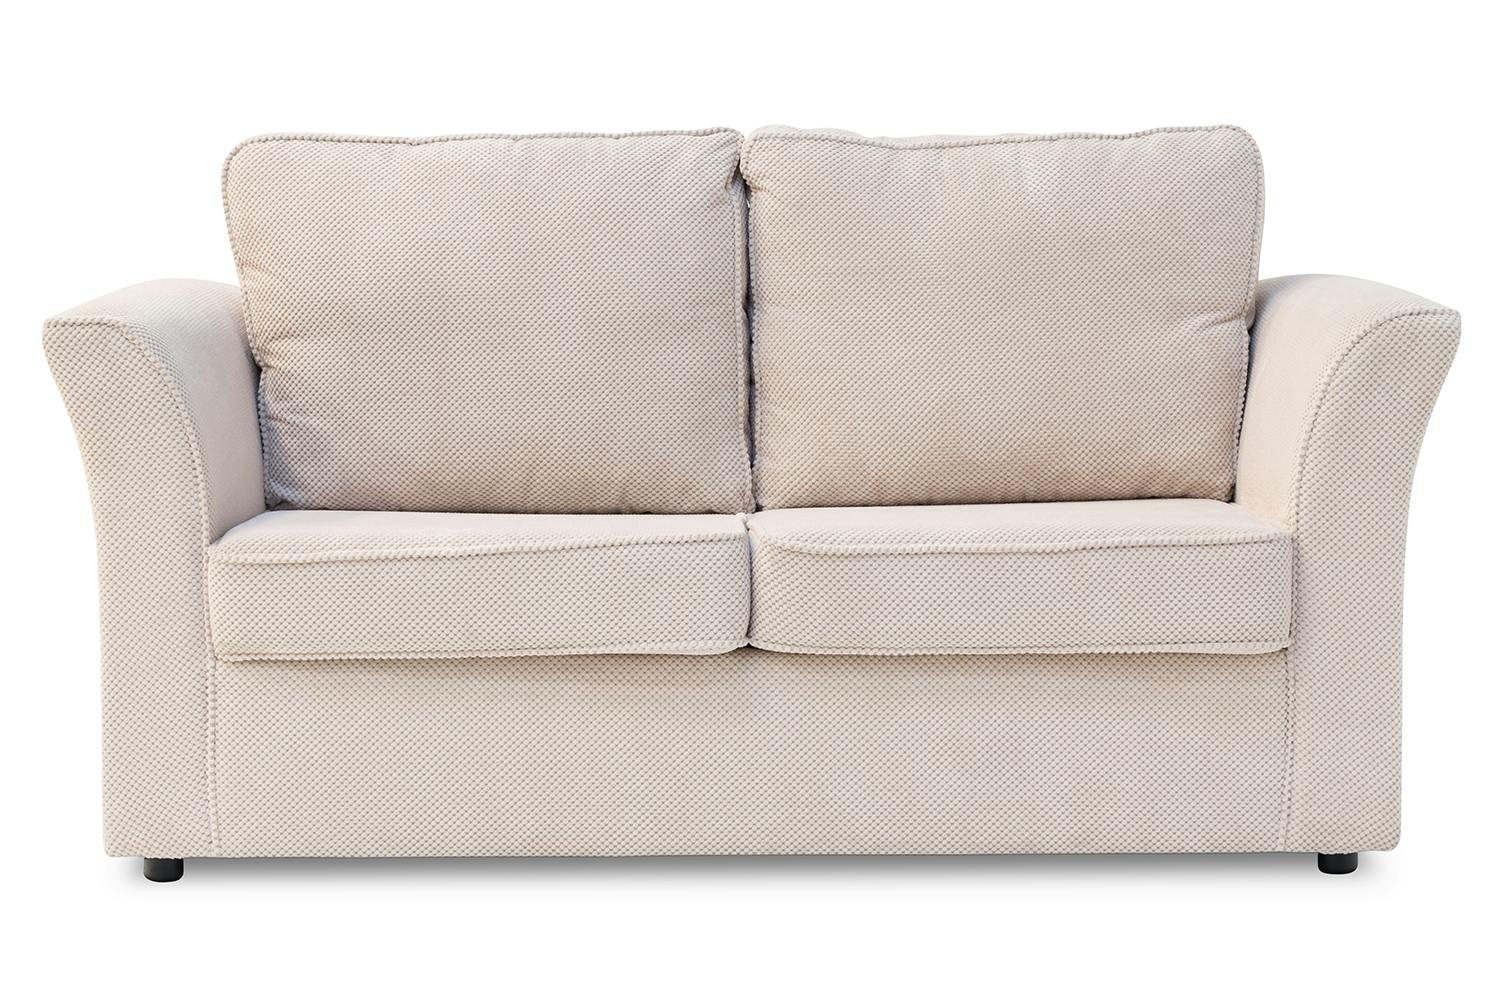 single sofa beds ireland